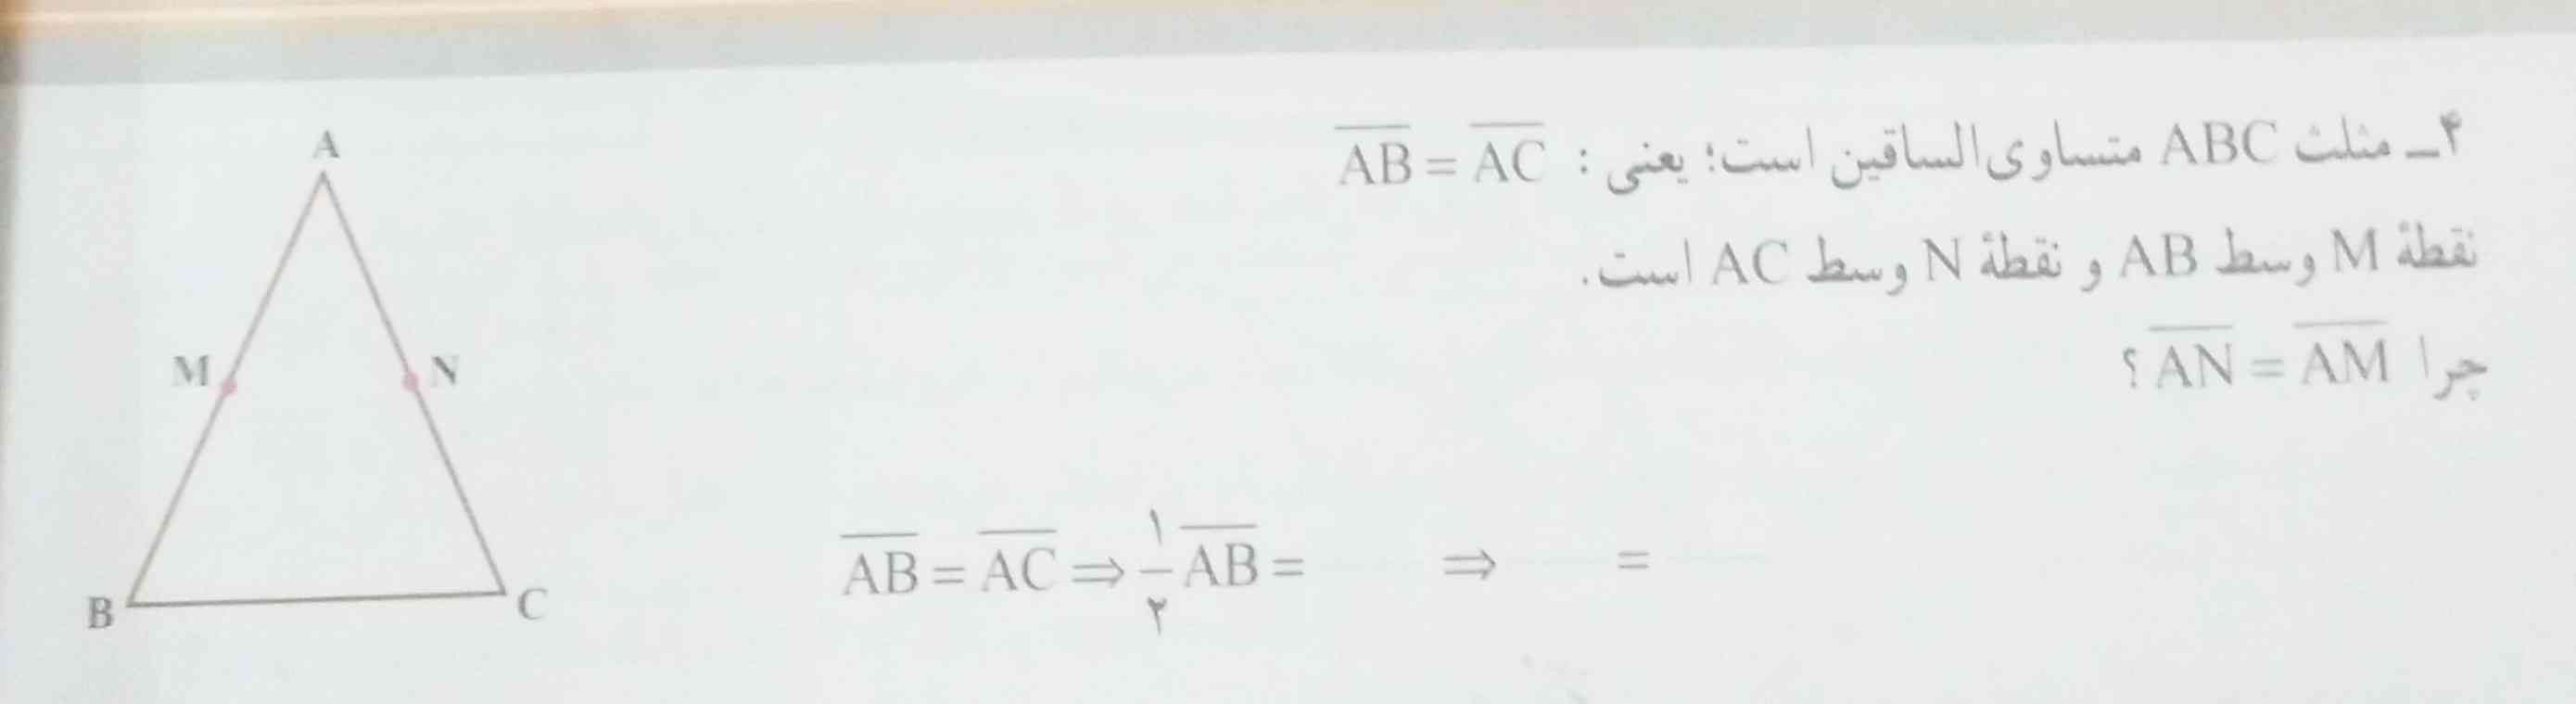 ص 44
4_مثلث ABCمتساوی الساقین است؛ یعنی: AB=AC نقطهMوسطABونقطهNوسطACاست. 
چراAN=AM؟ 